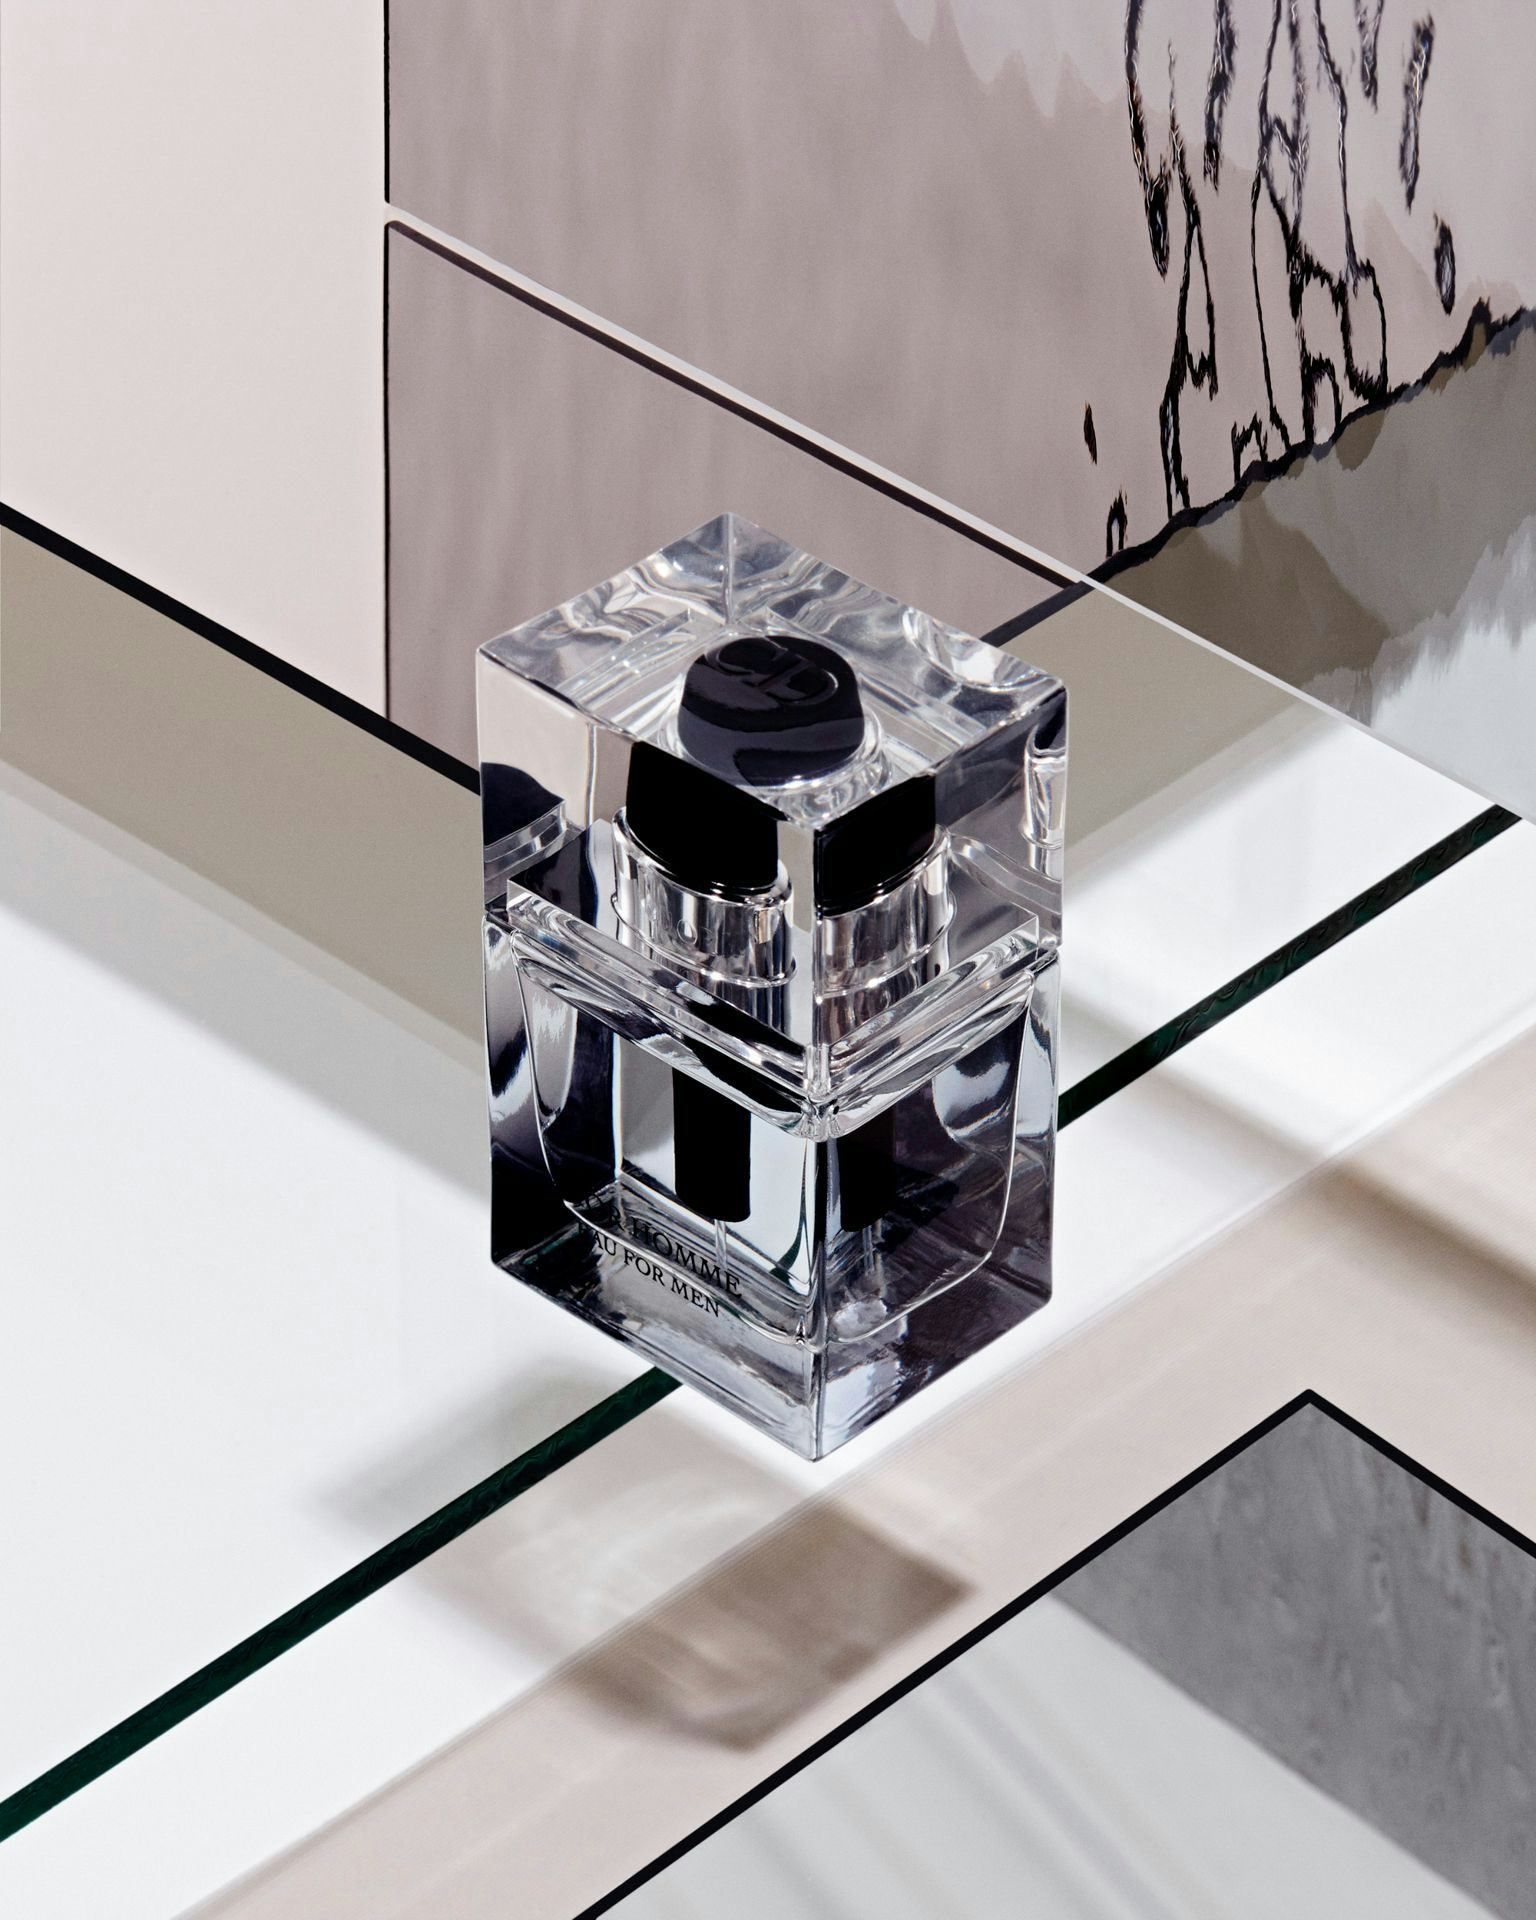 A glass perfume bottle in a geometric setting.